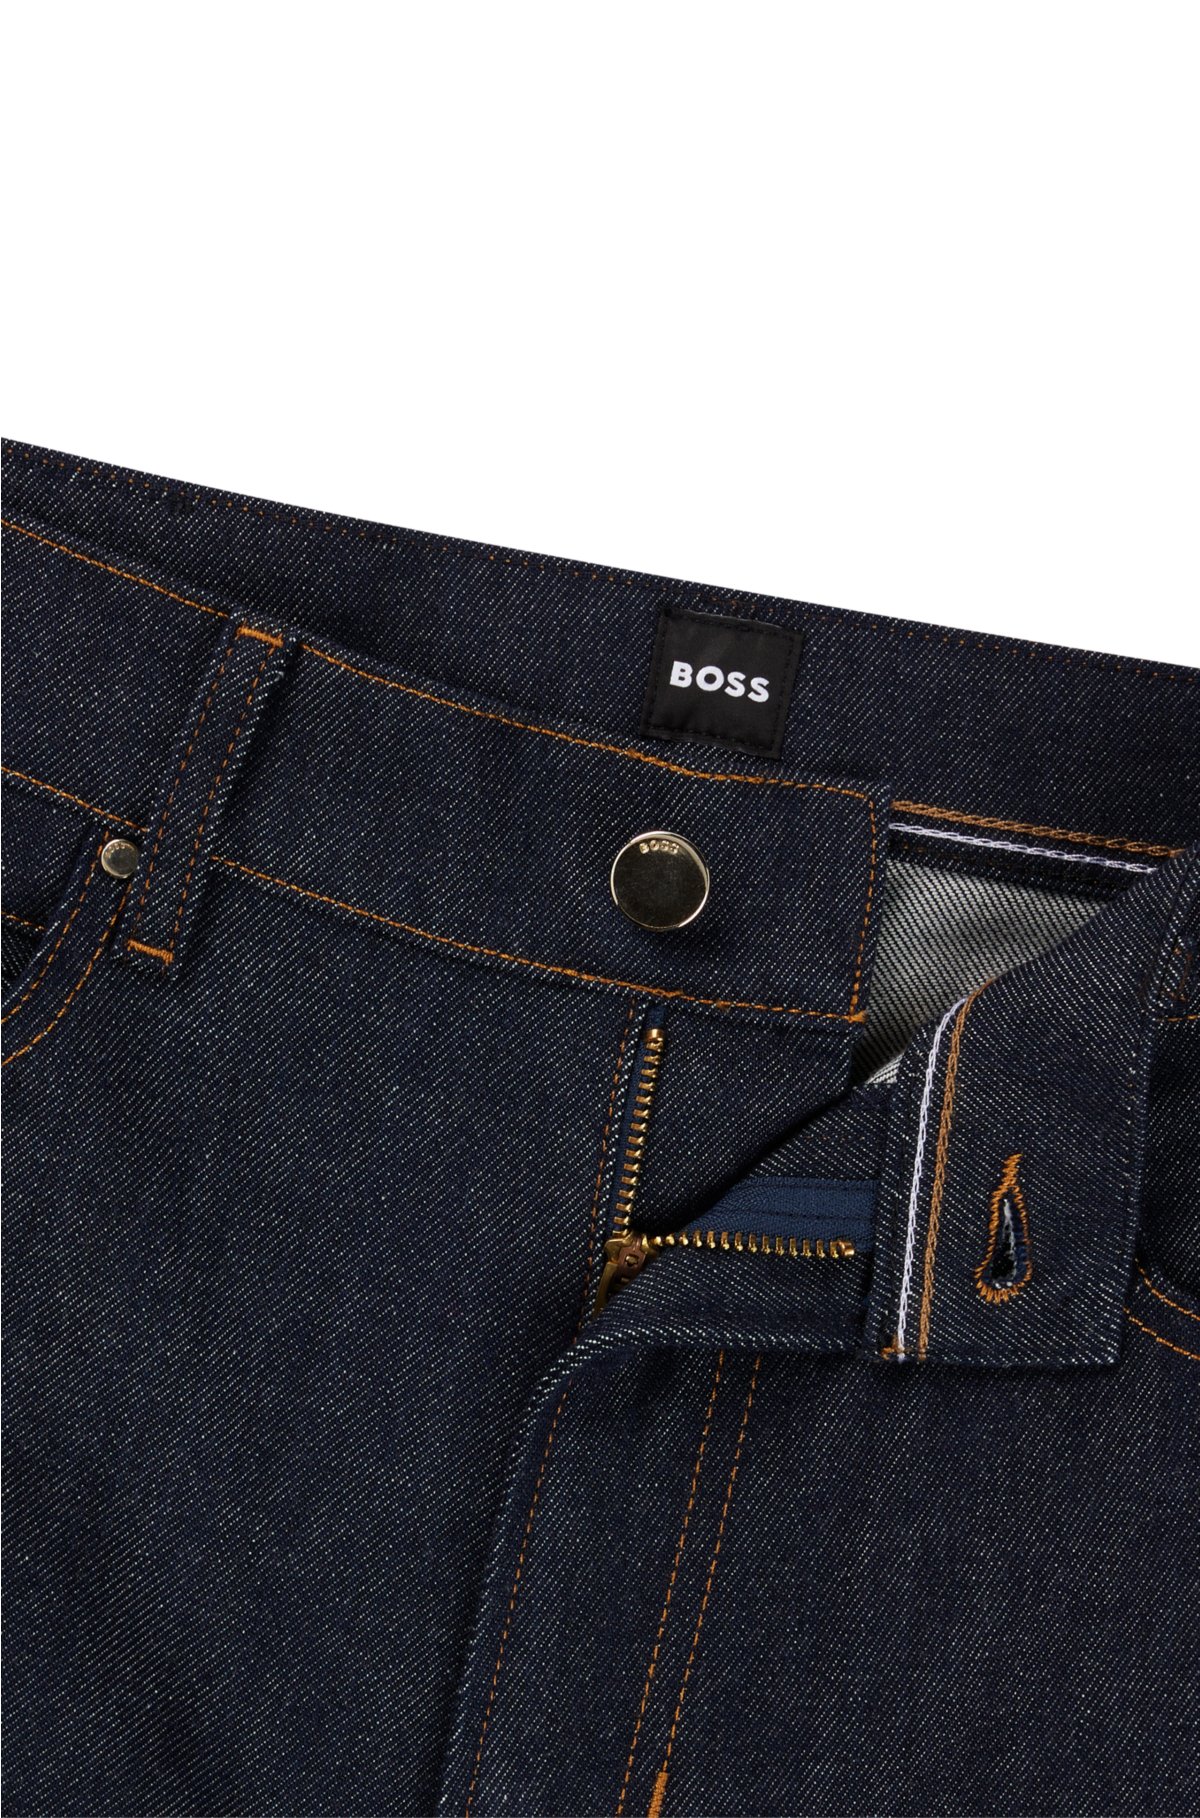 Slim-fit jeans in navy comfort-stretch denim, Dark Blue